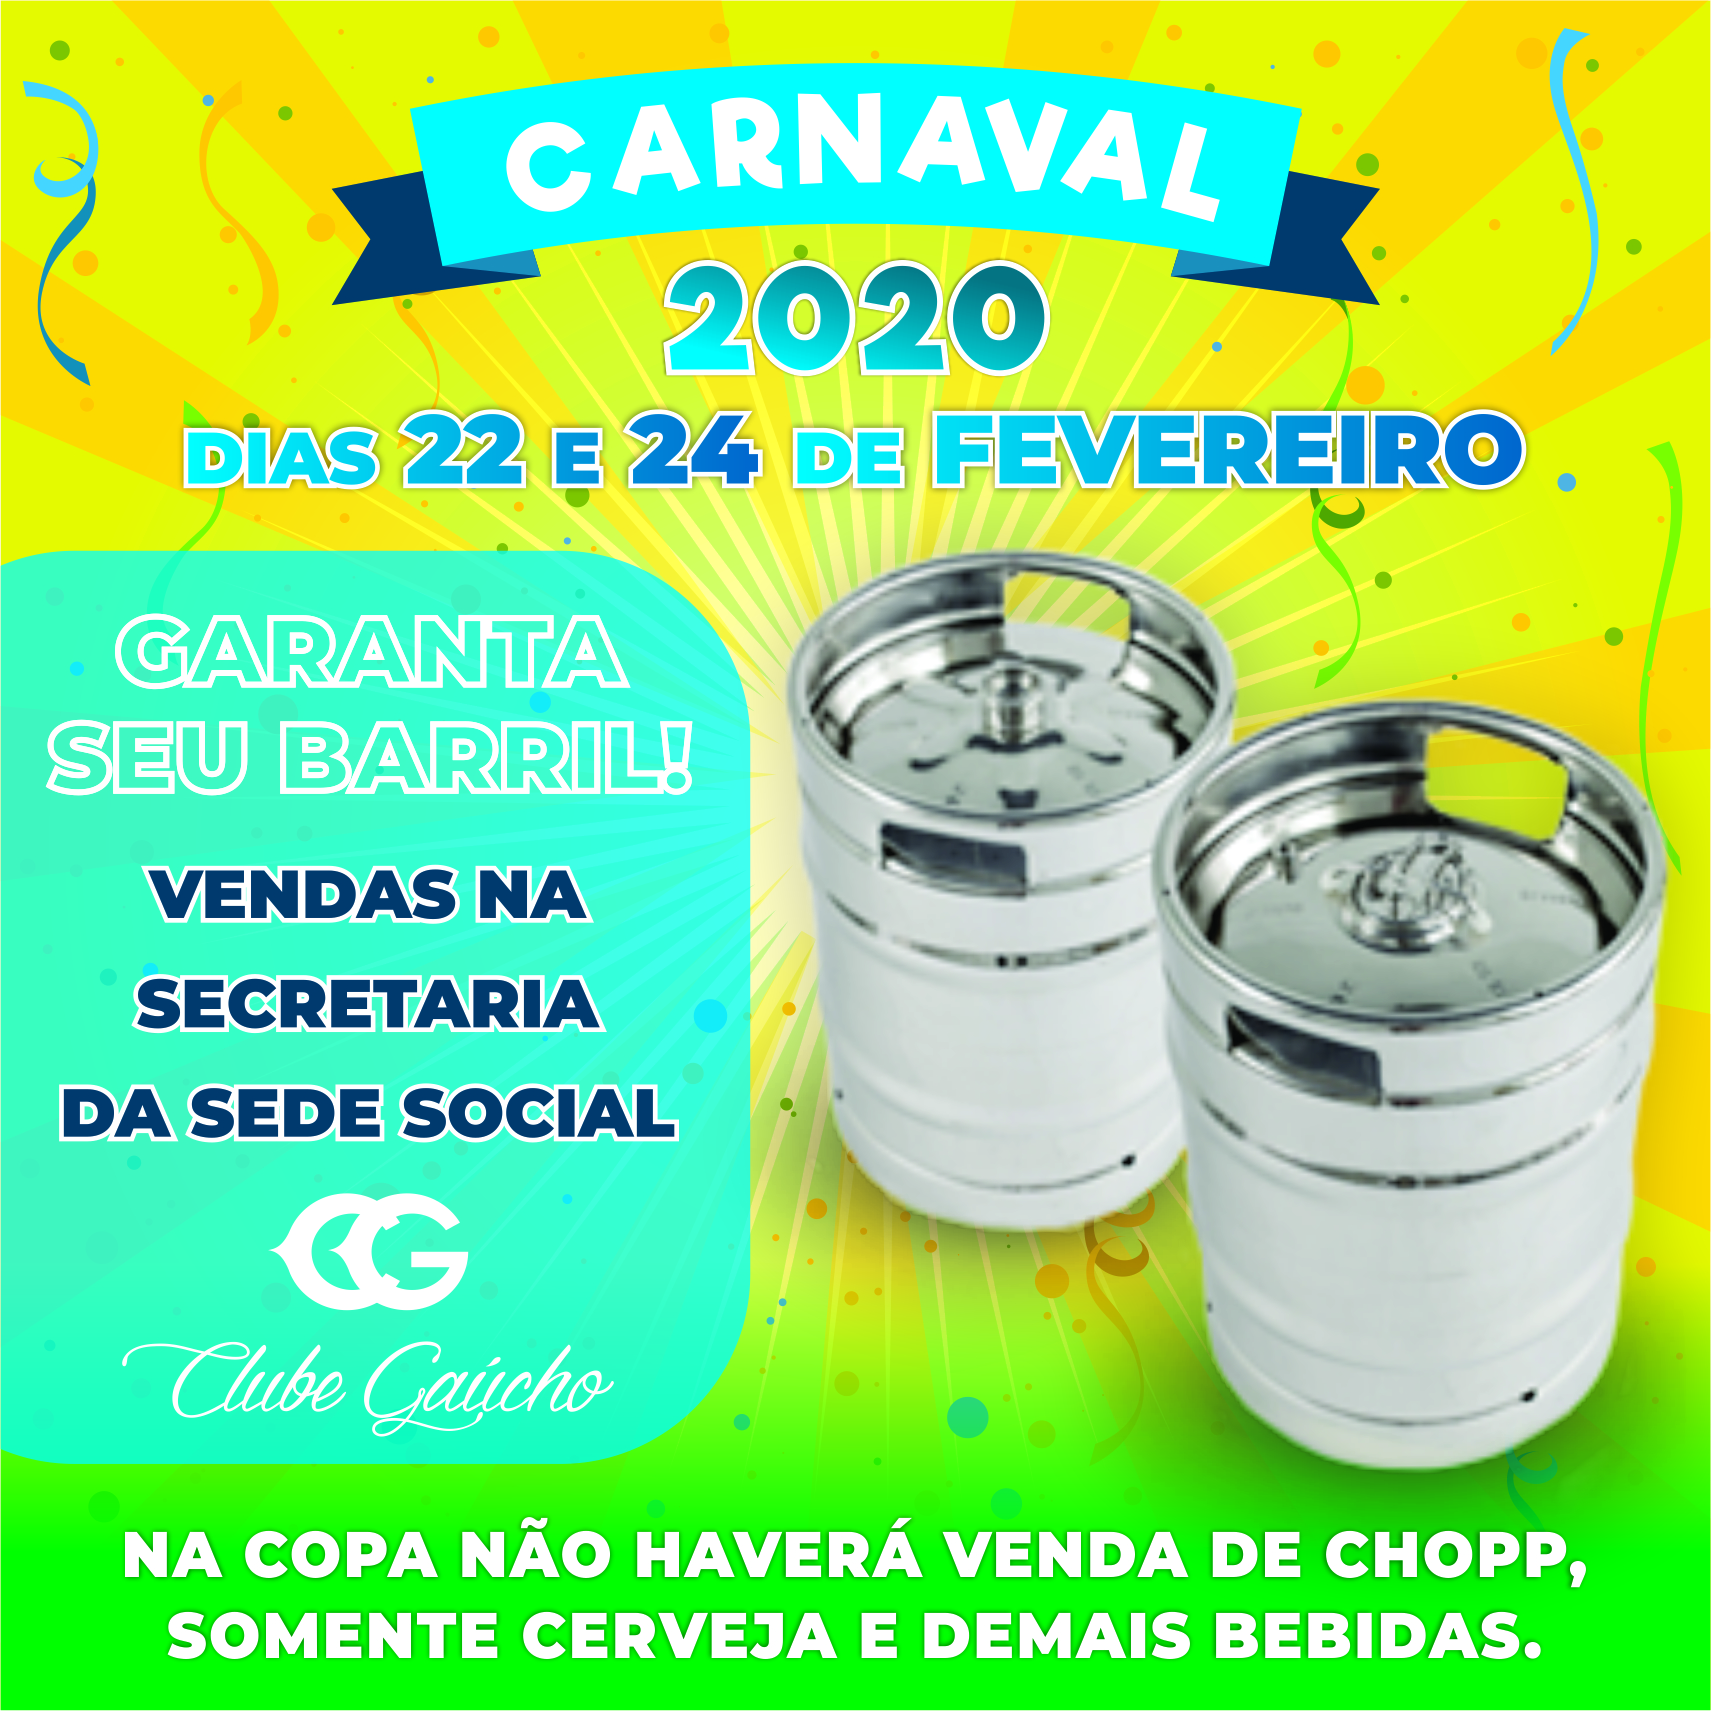 Carnaval 2020 CG